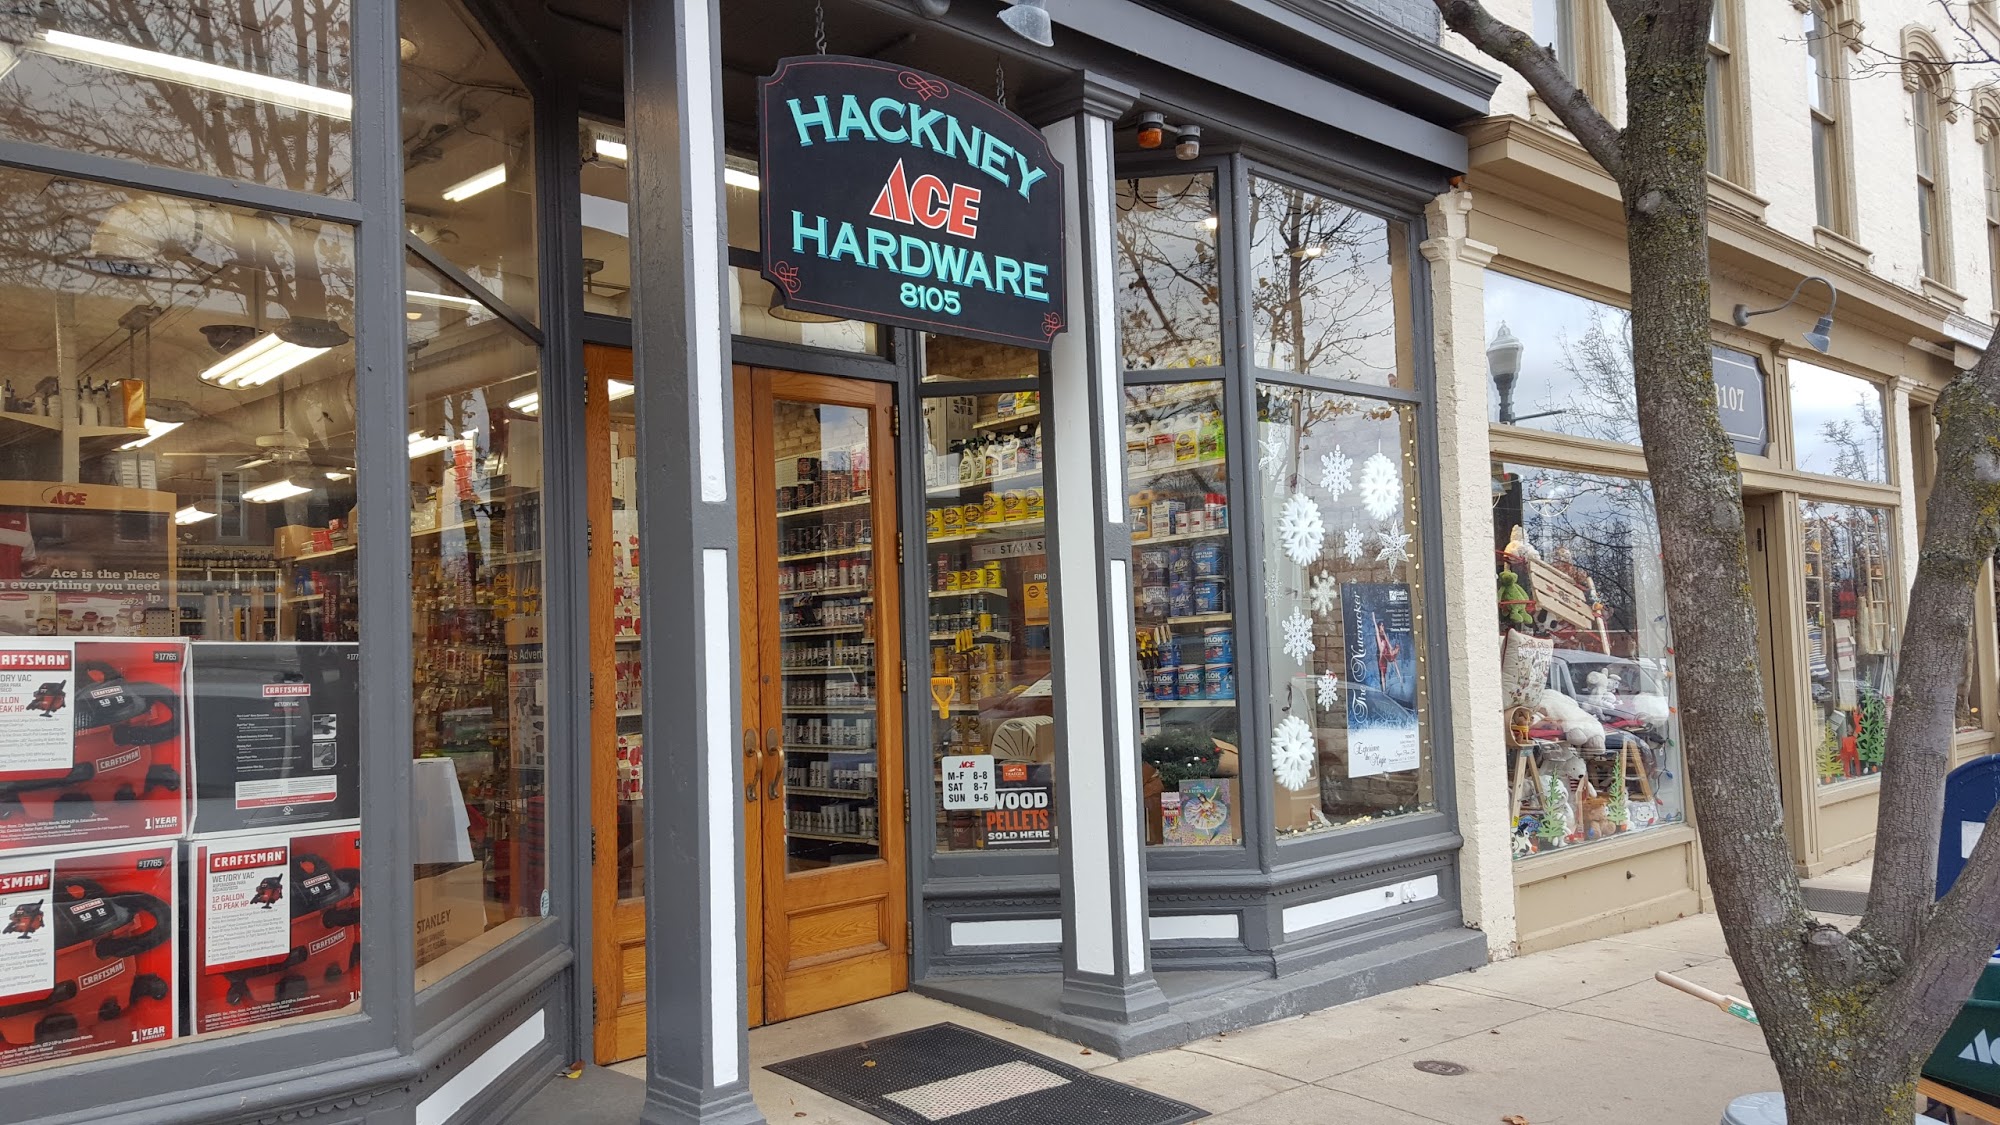 Hackney Ace Hardware